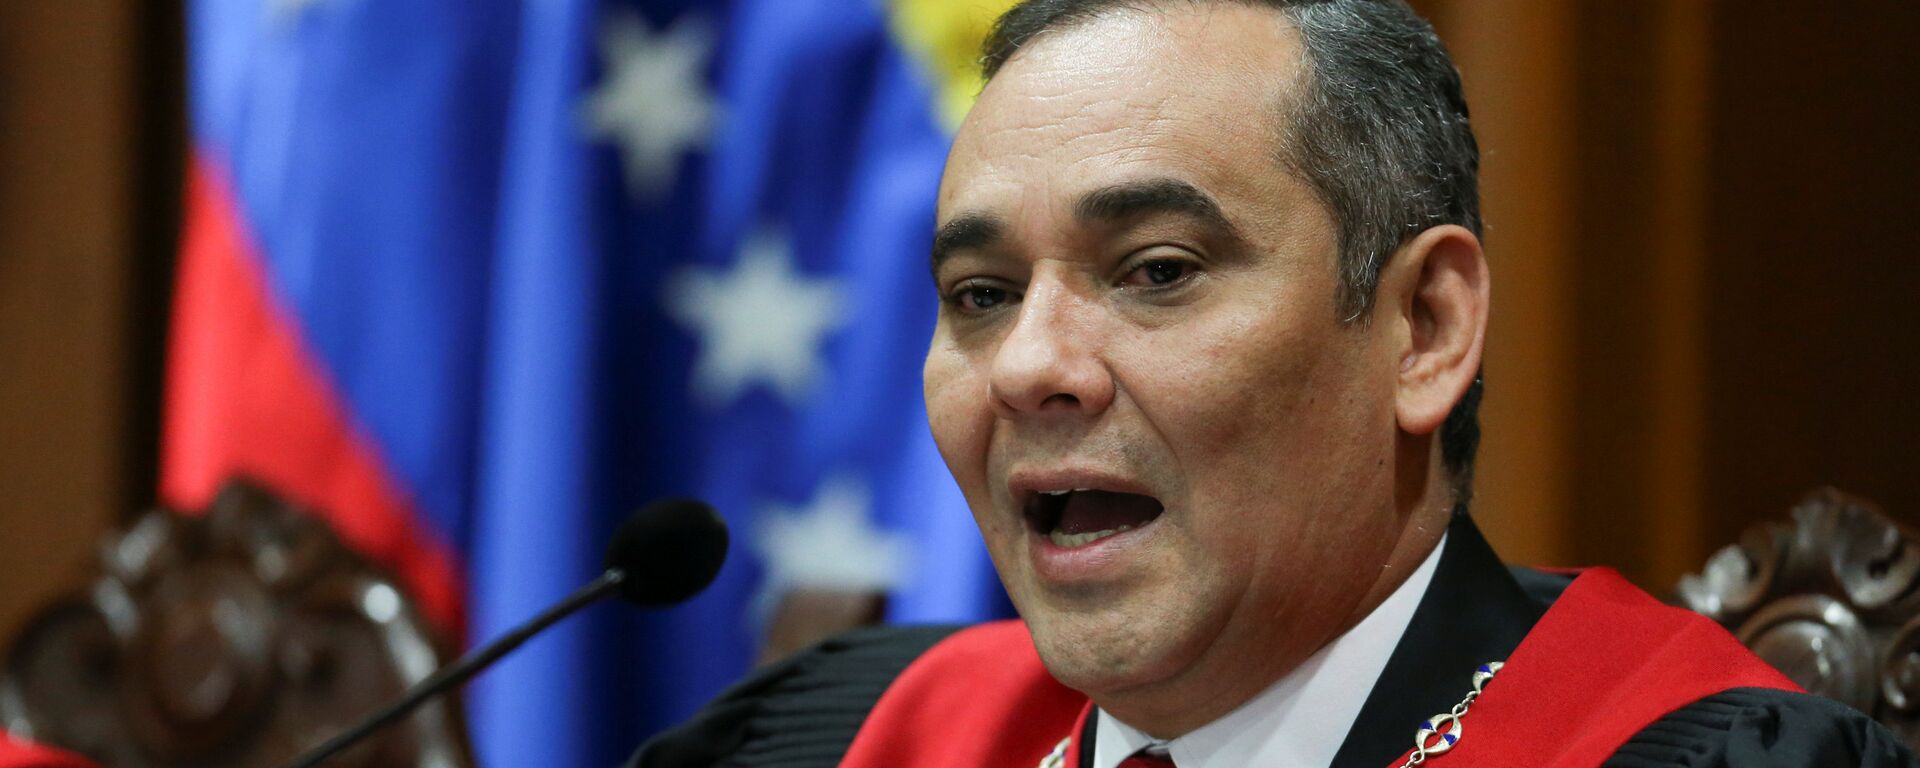 Maikel Moreno, presidente del Tribunal Supremo de Venezuela - Sputnik Mundo, 1920, 27.07.2021